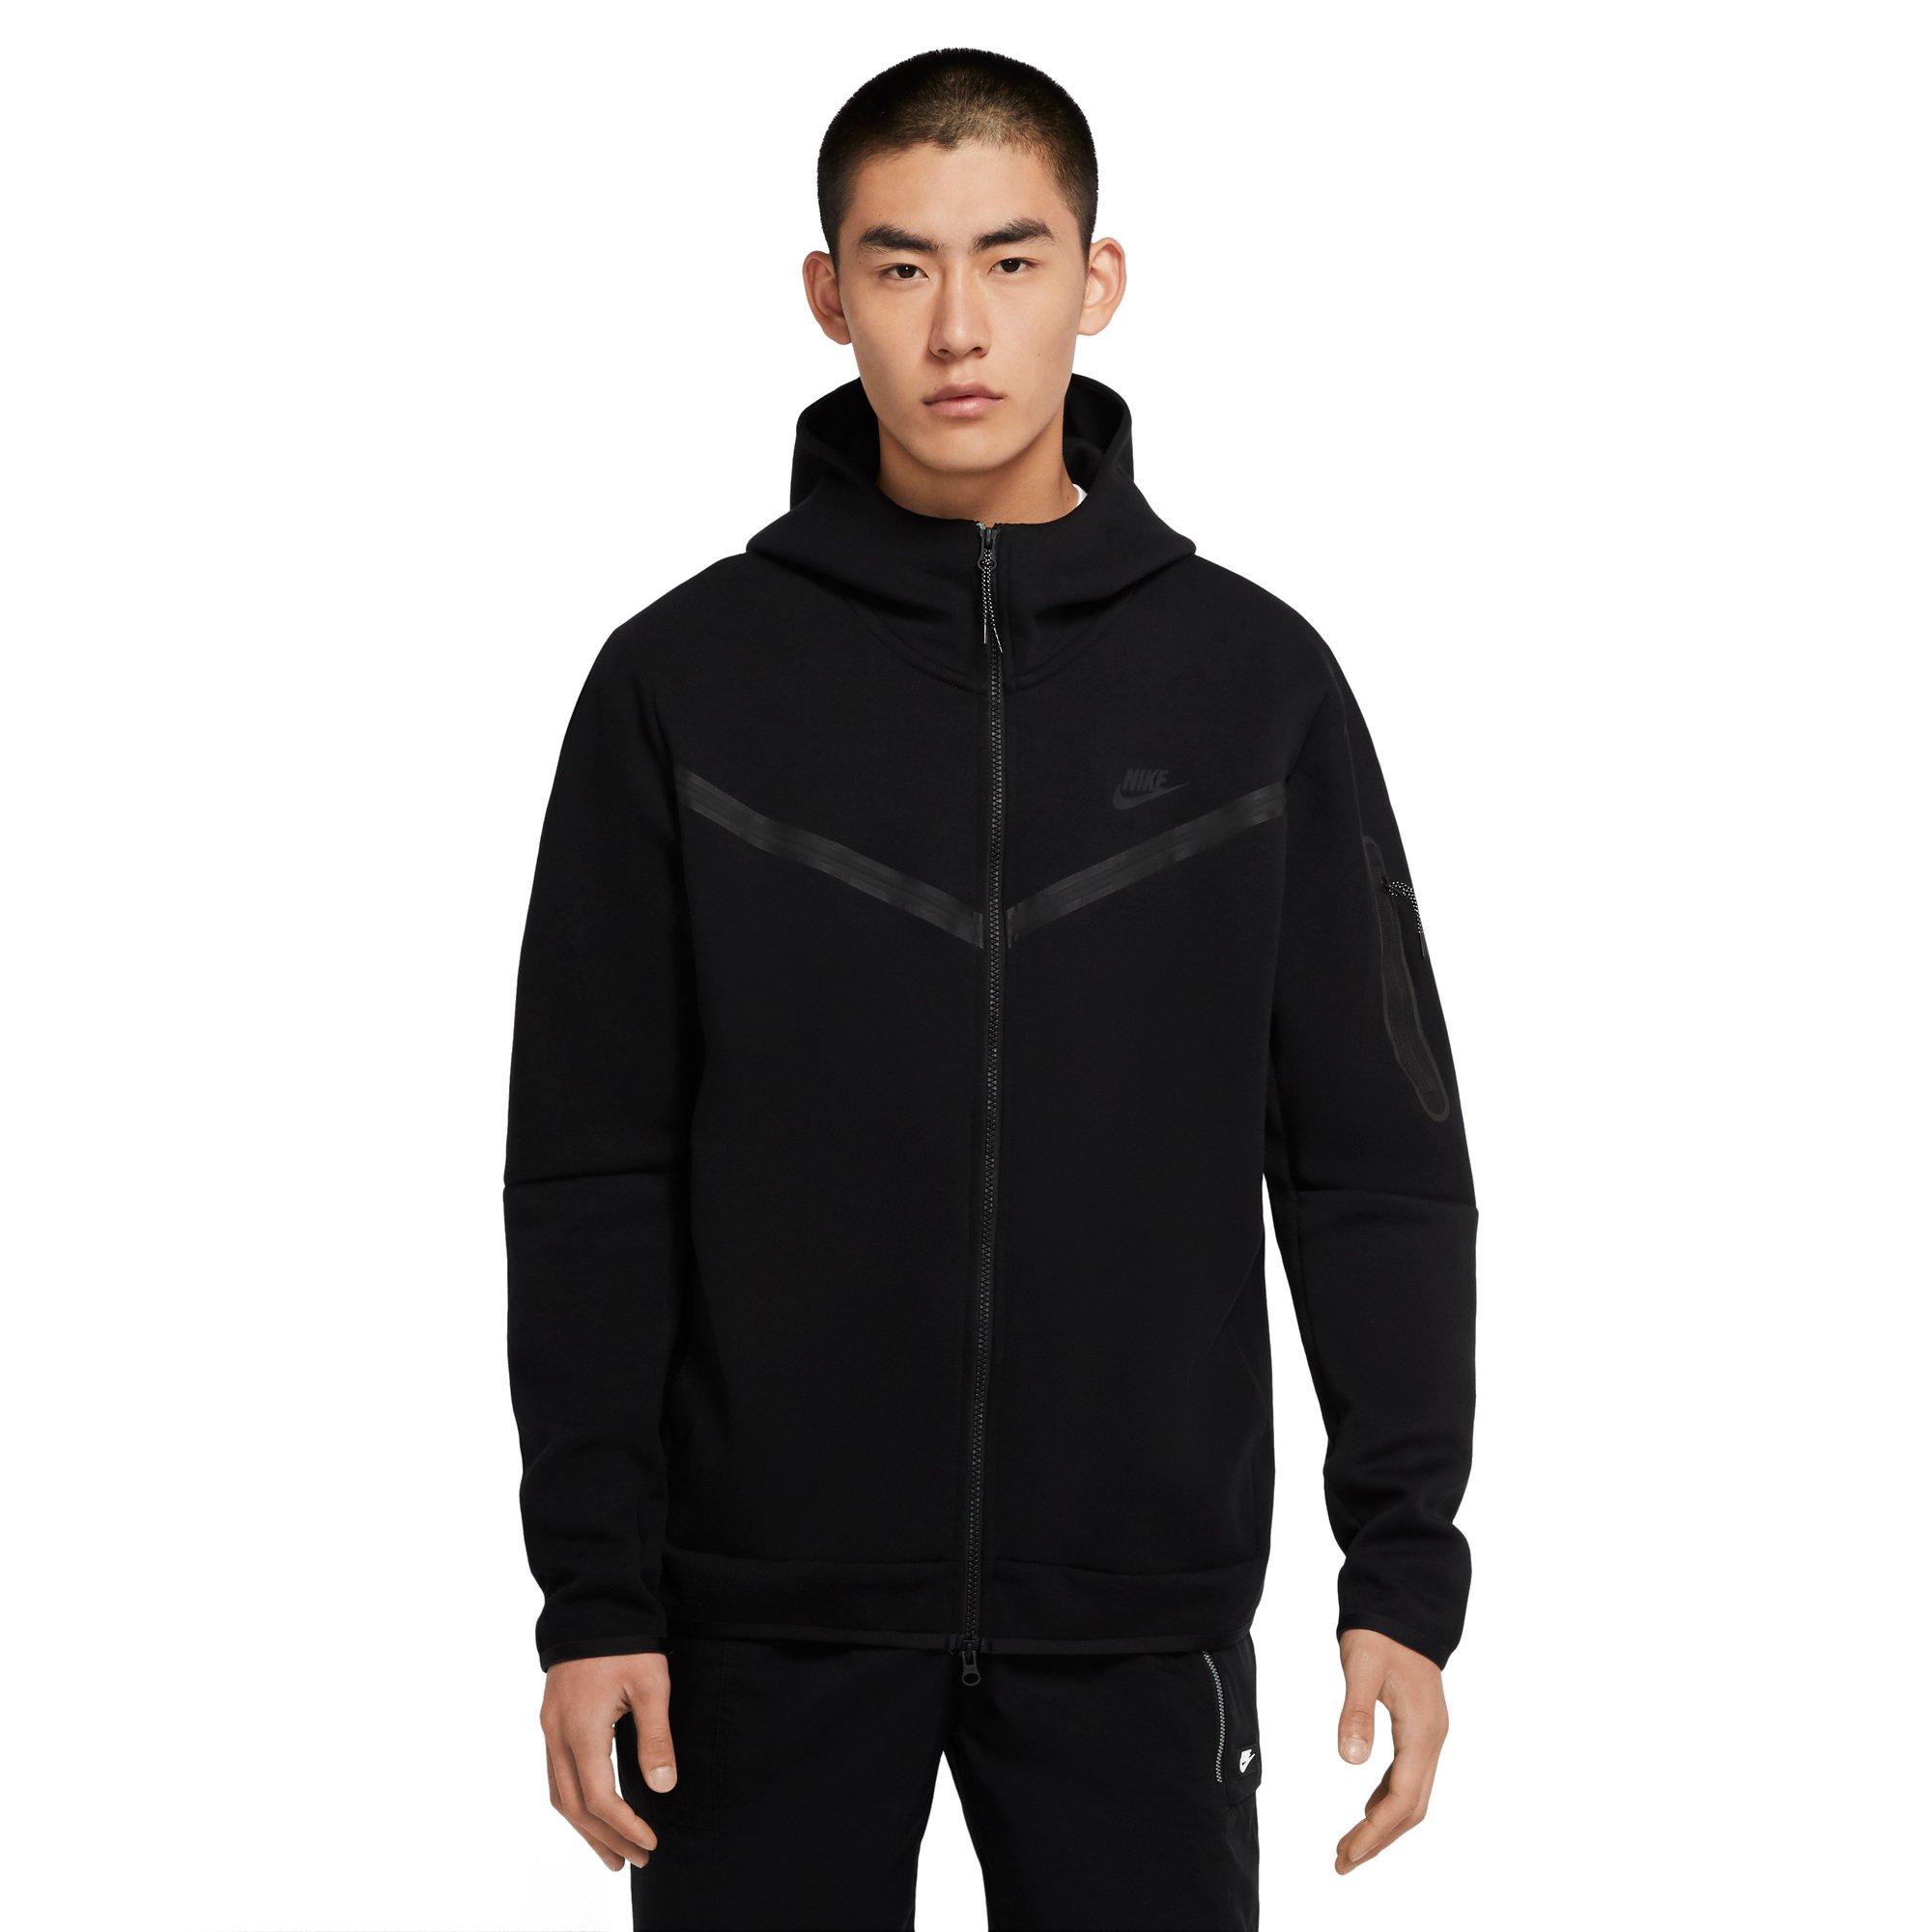 liefde Floreren Eindig Nike Sportswear Tech Fleece Men's Full-Zip Hoodie - Black